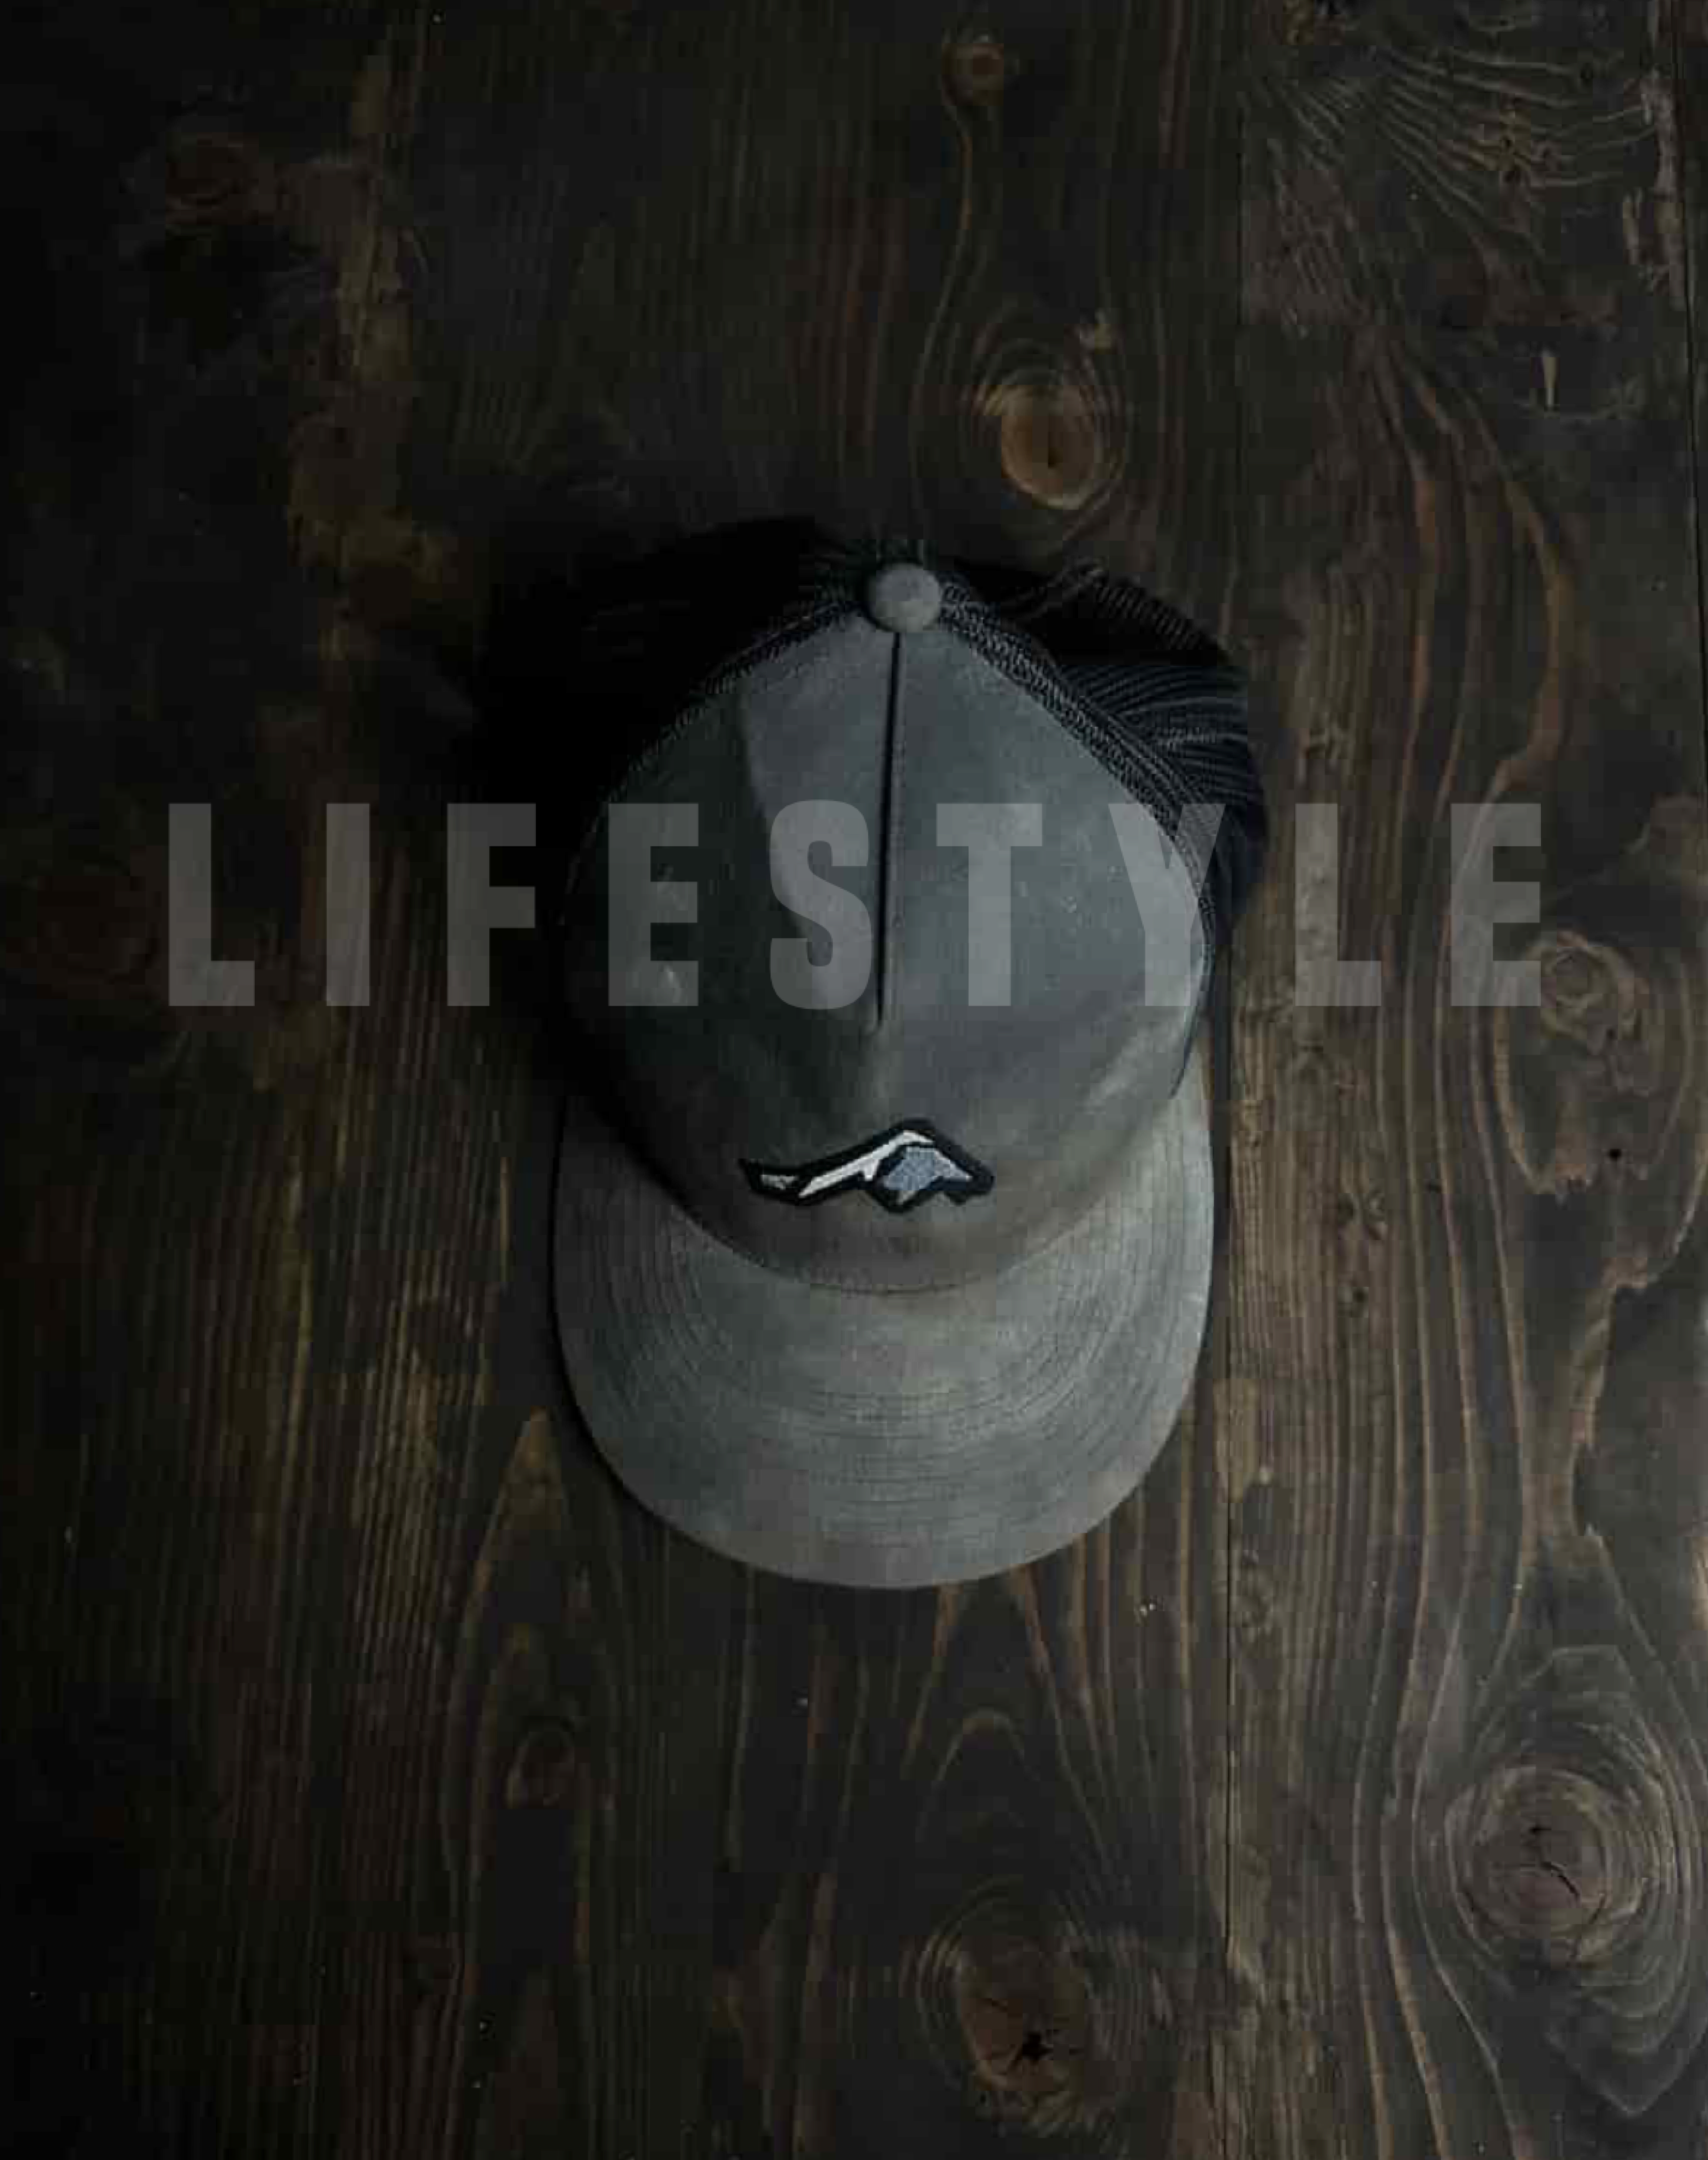 Ruckmule mountain gear lifestyle apparel t shirts hoodies hats snapbacks 